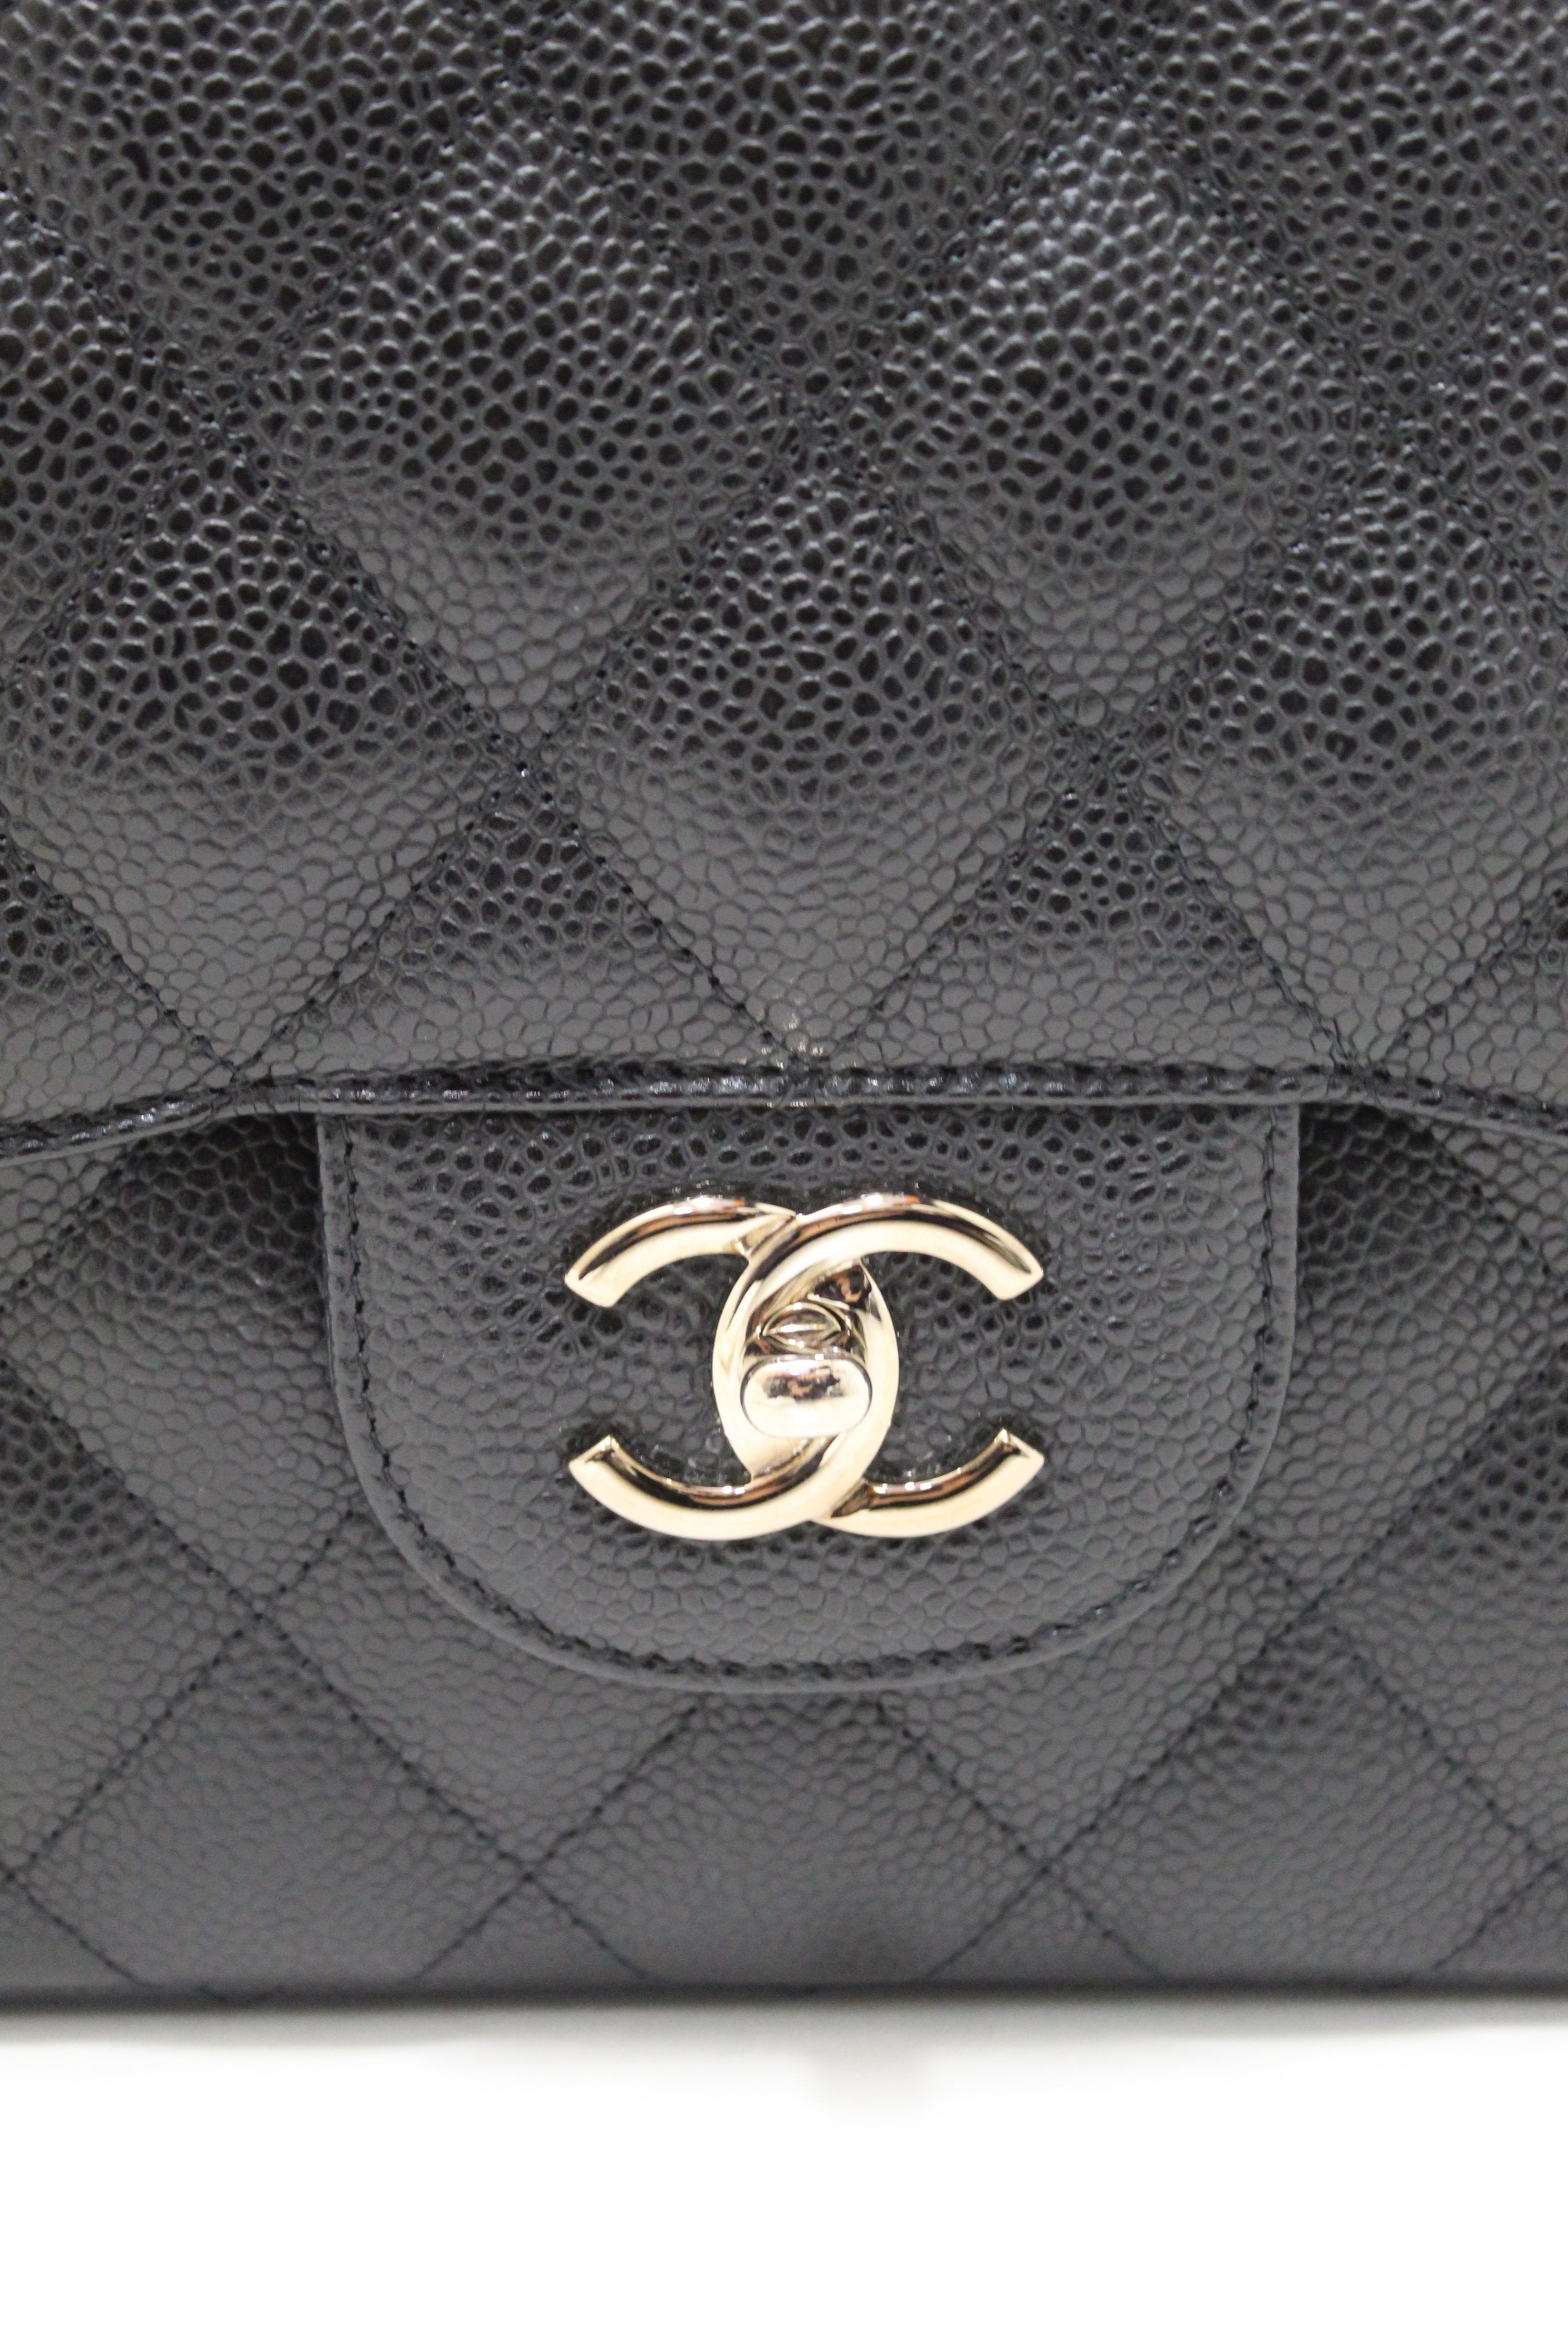 Chanel Classic Jumbo GHW - Designer WishBags